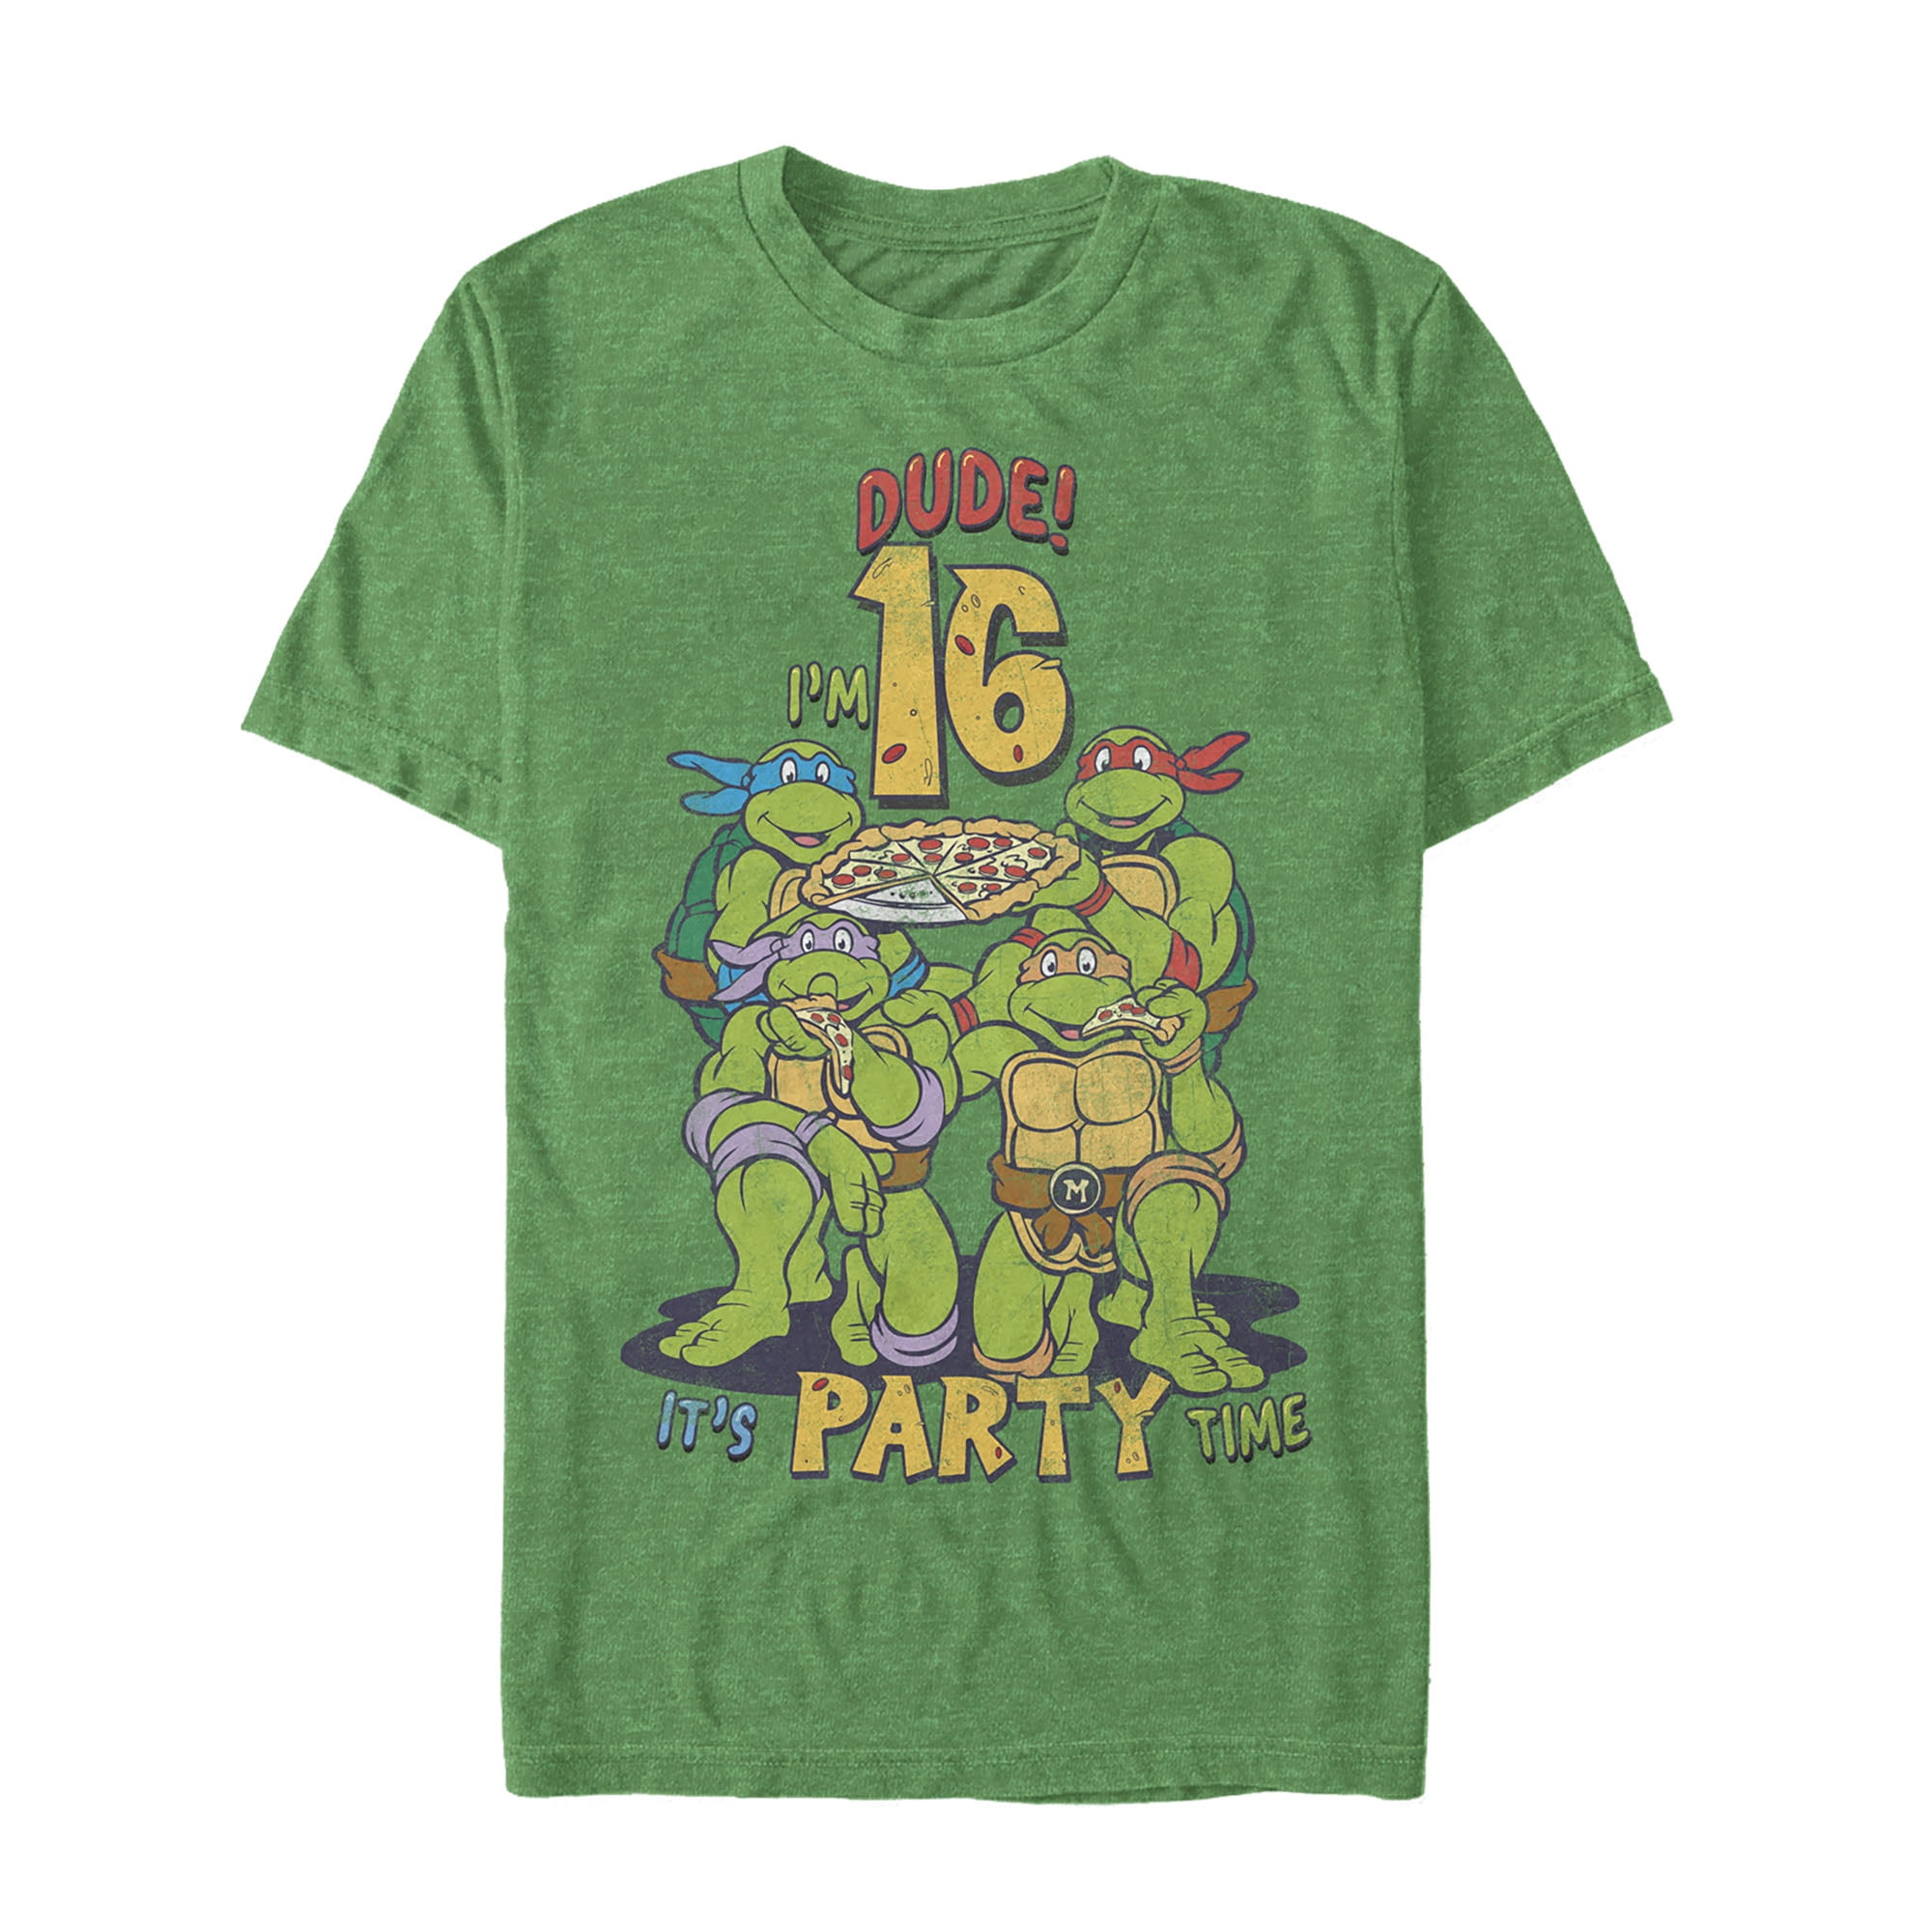 *Teenage Mutant Ninja Turtles TMNT Kids Boys Girls Unisex White Top T-shirt 390 